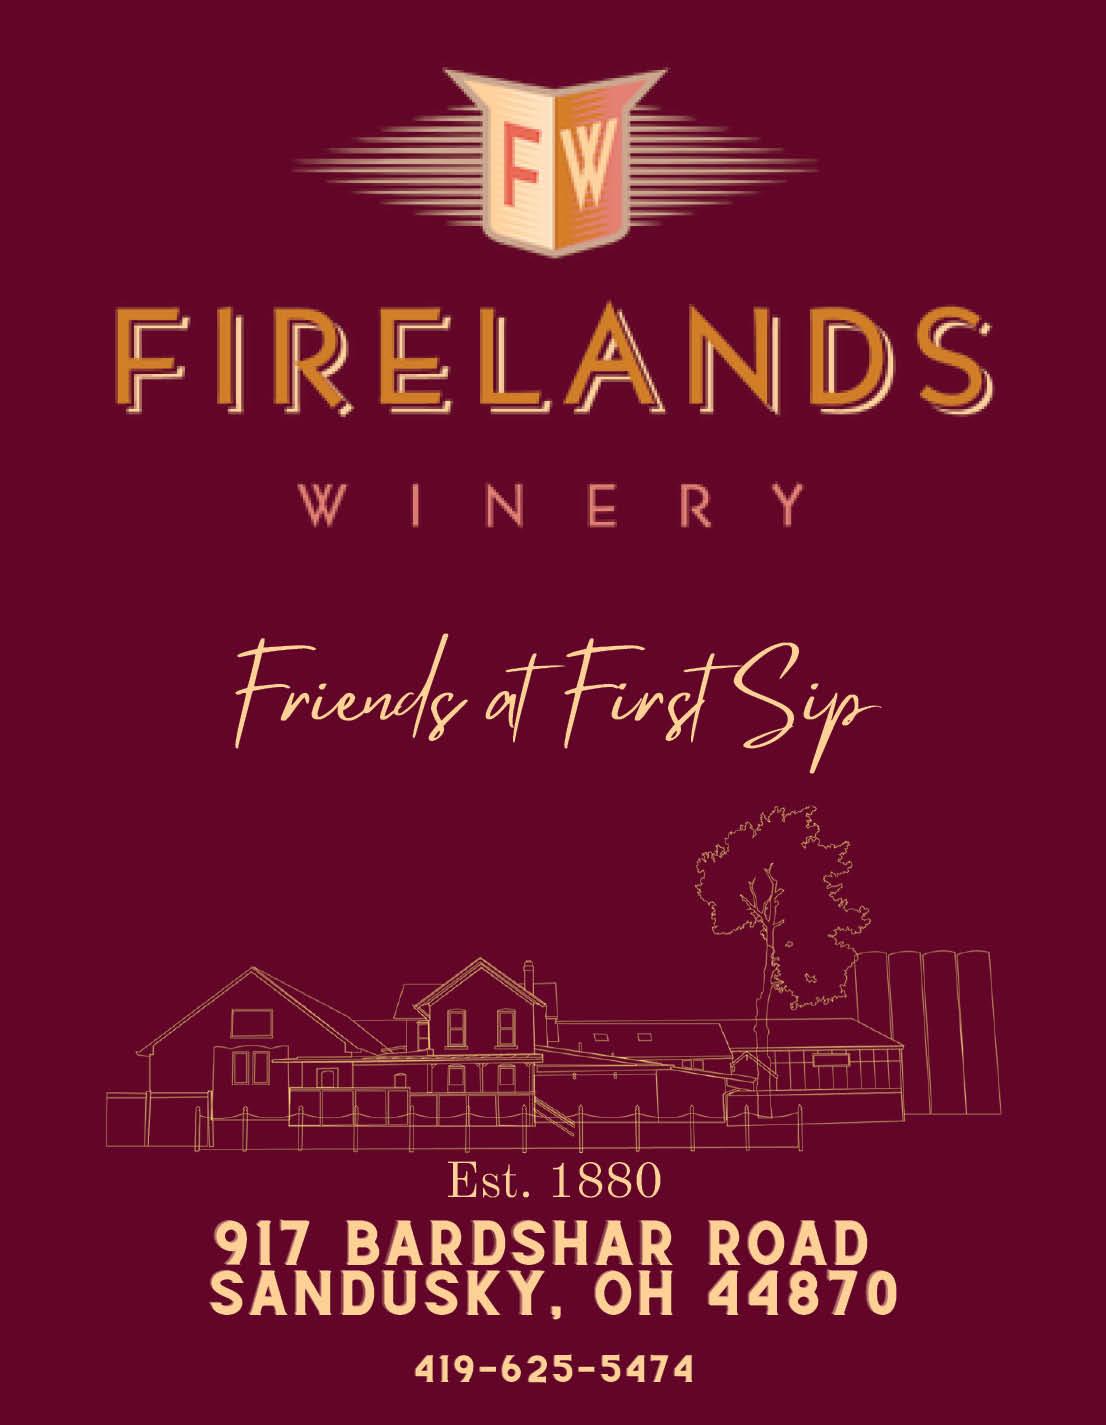 Firelands Winery & Restaurant